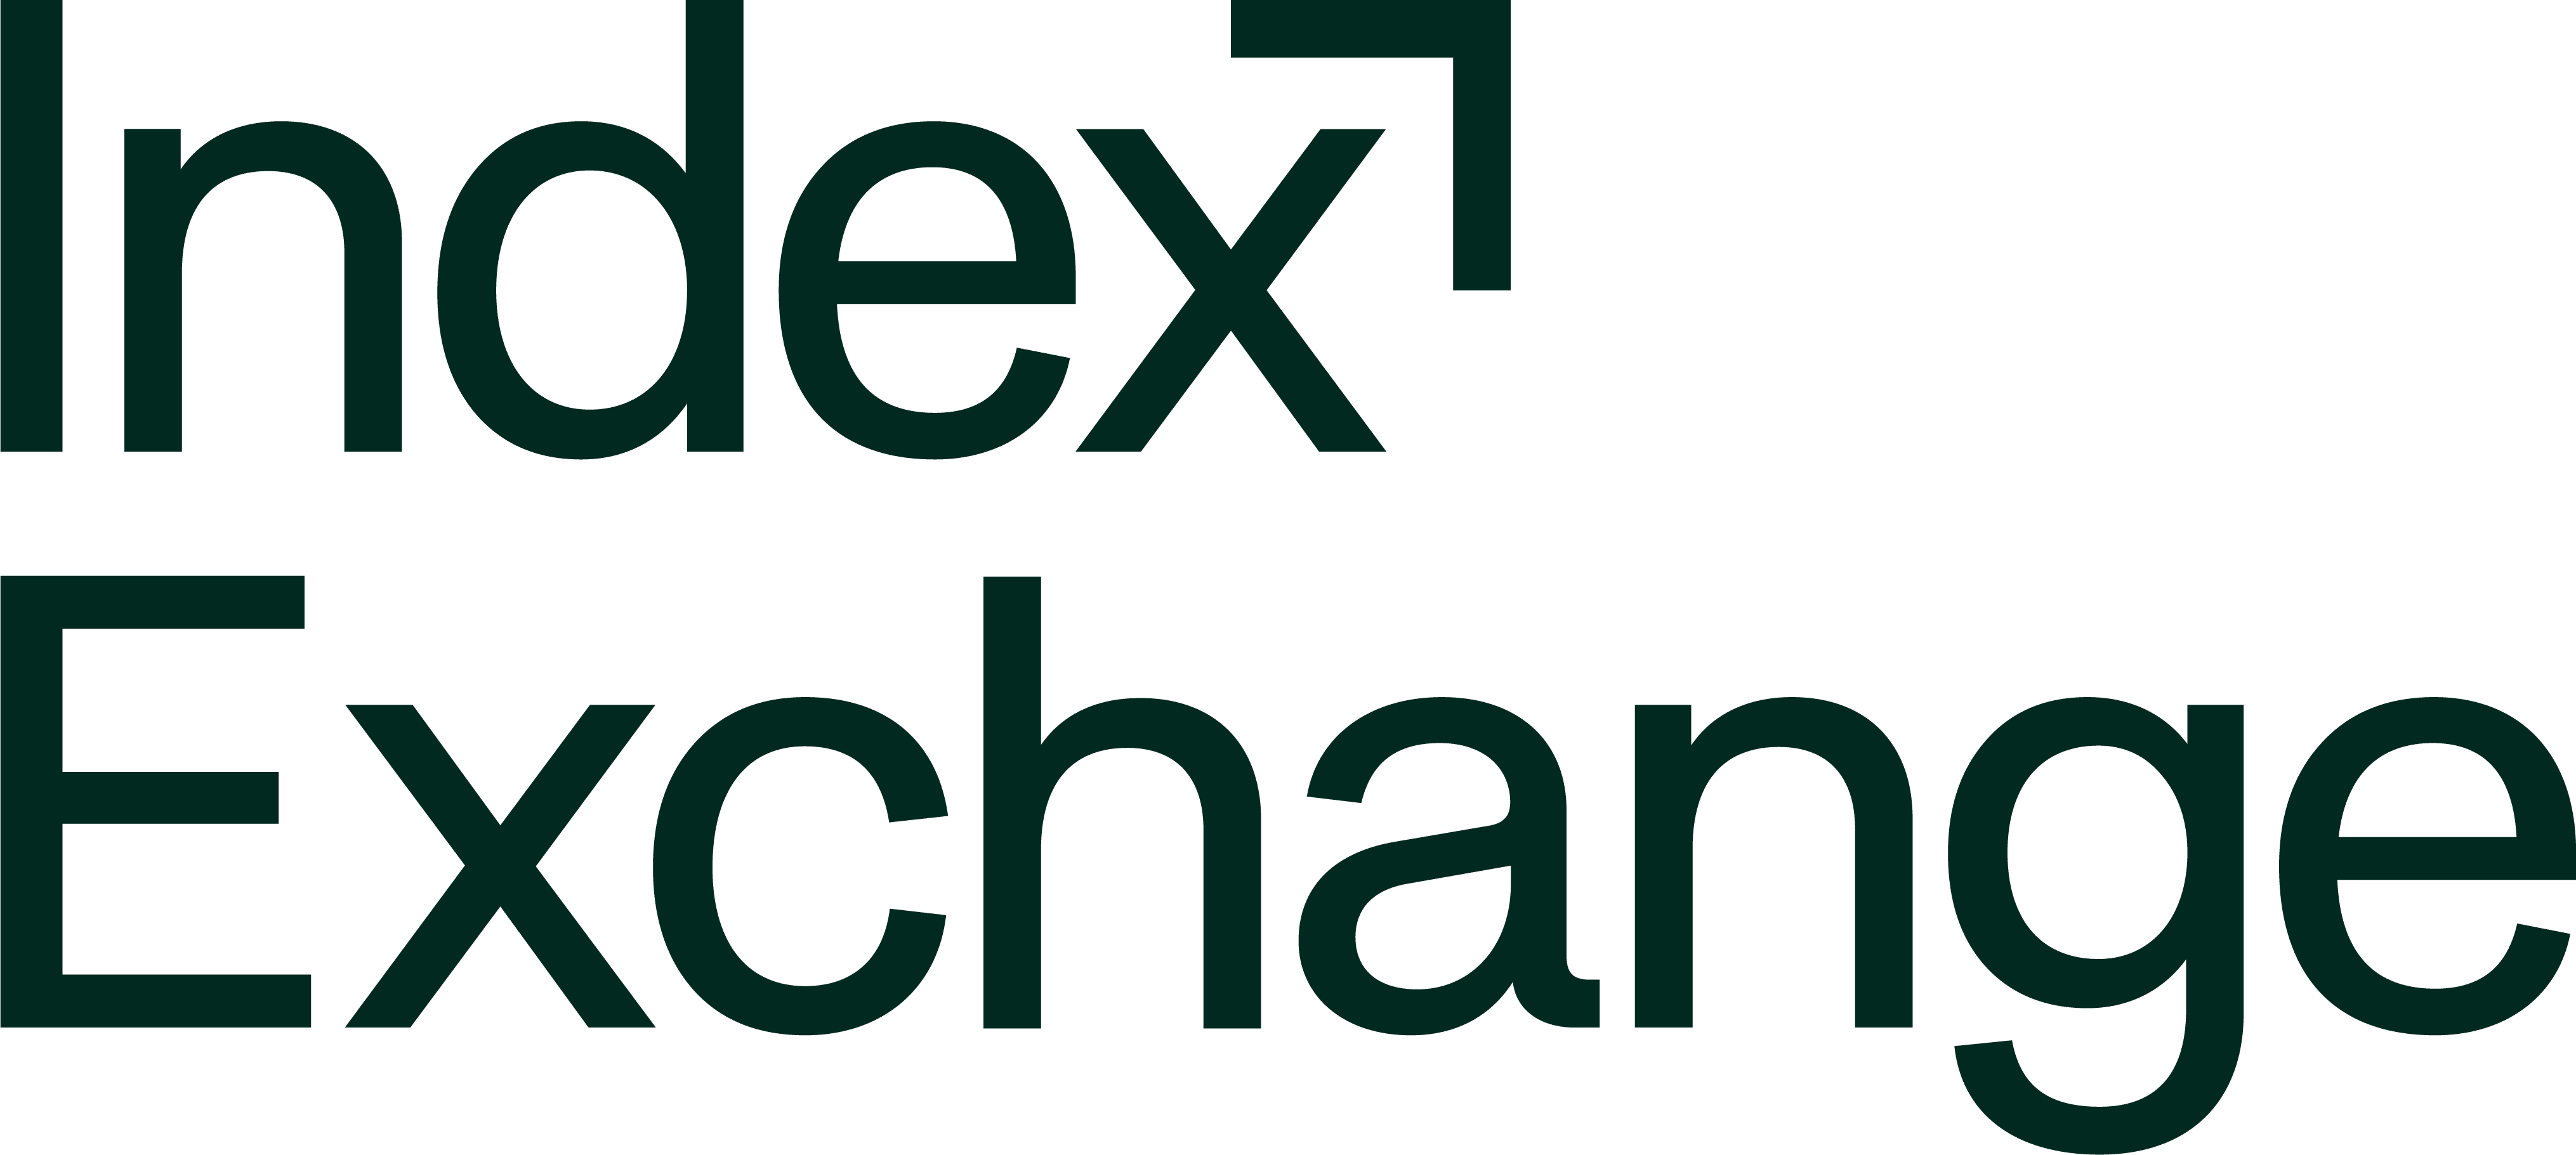 Index_Exchange_Logo_Full_Evergreen